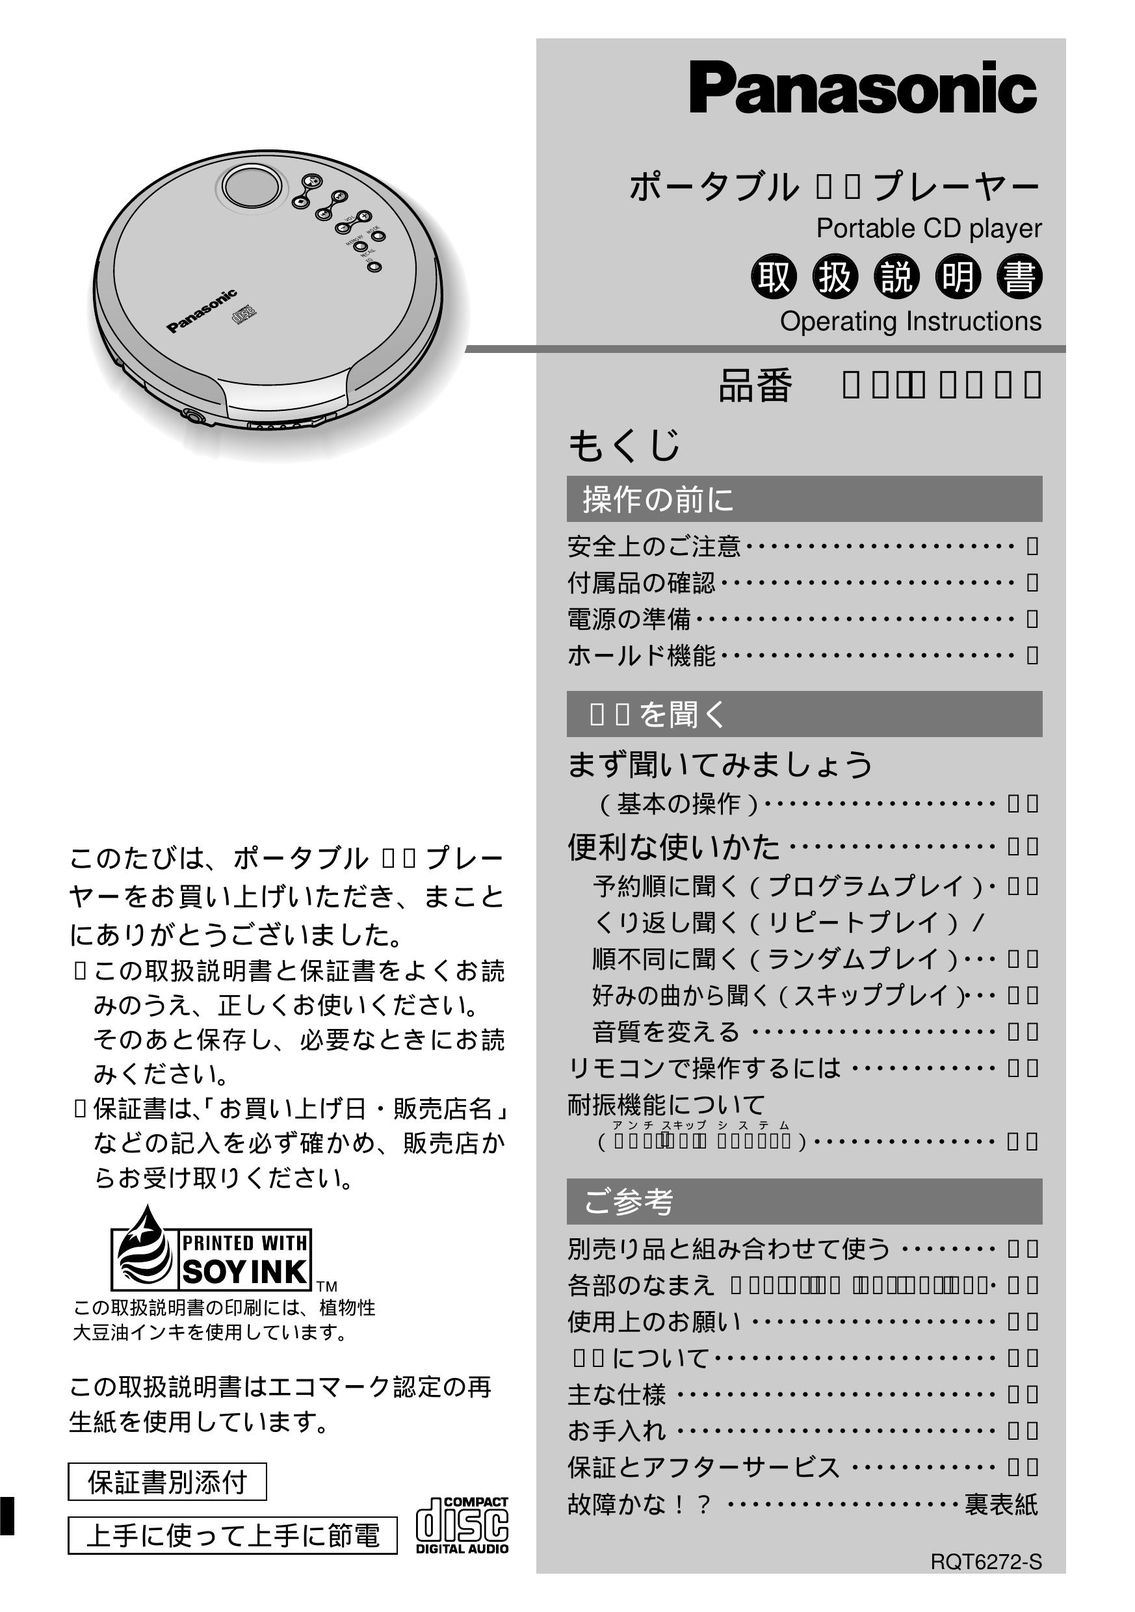 Panasonic SL-CT490 Portable CD Player User Manual